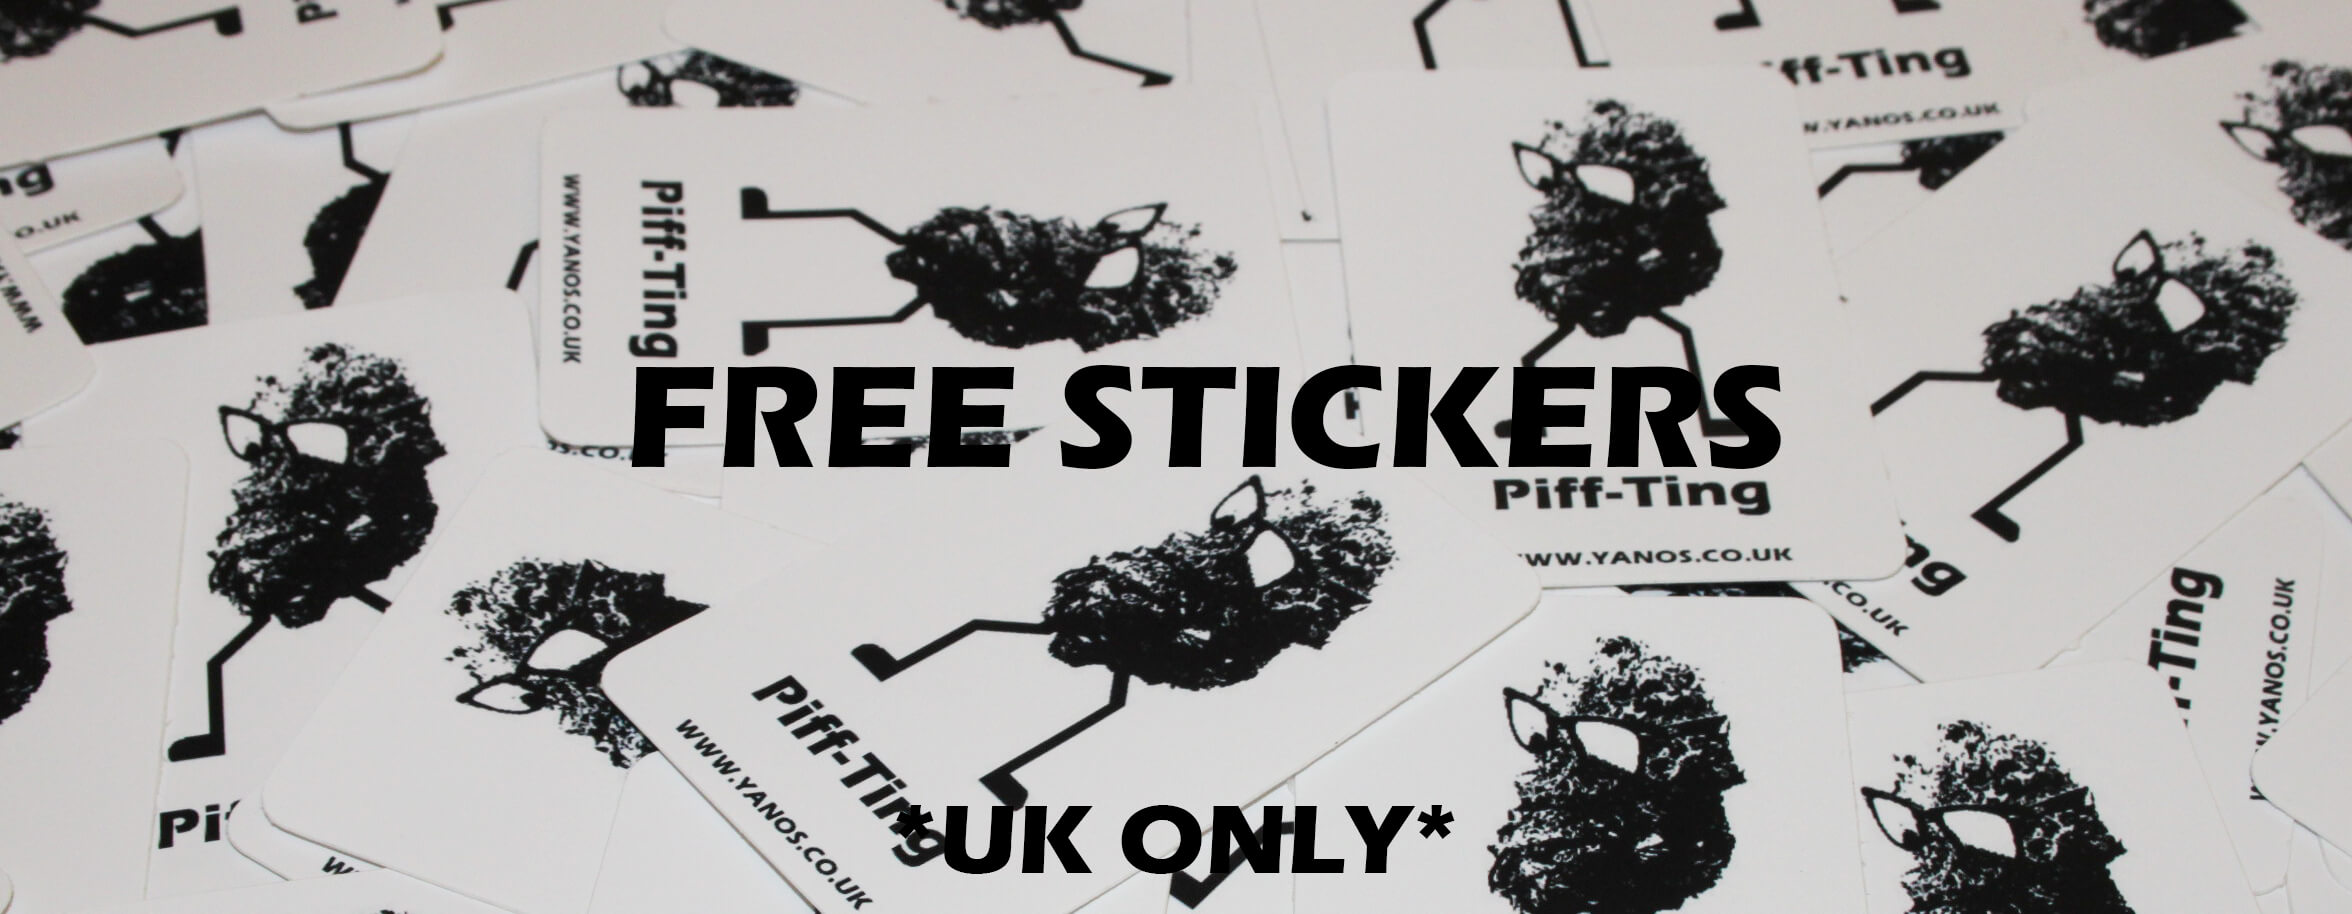 Free Stickers | YANOS